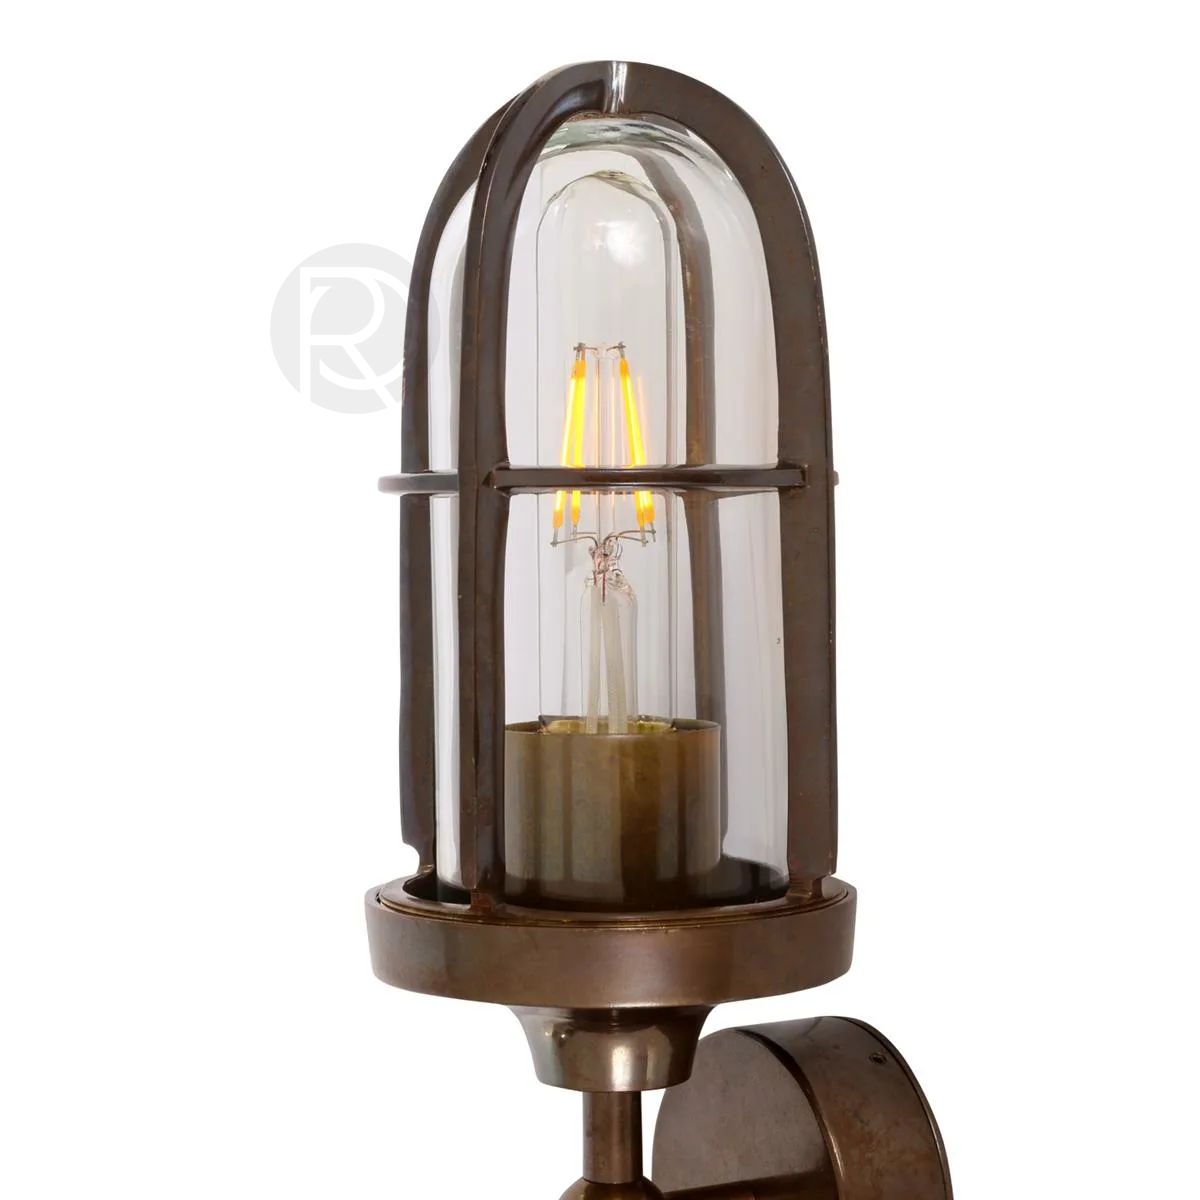 Designer wall lamp (Sconce) CLAYTON DOUBLE by Mullan Lighting